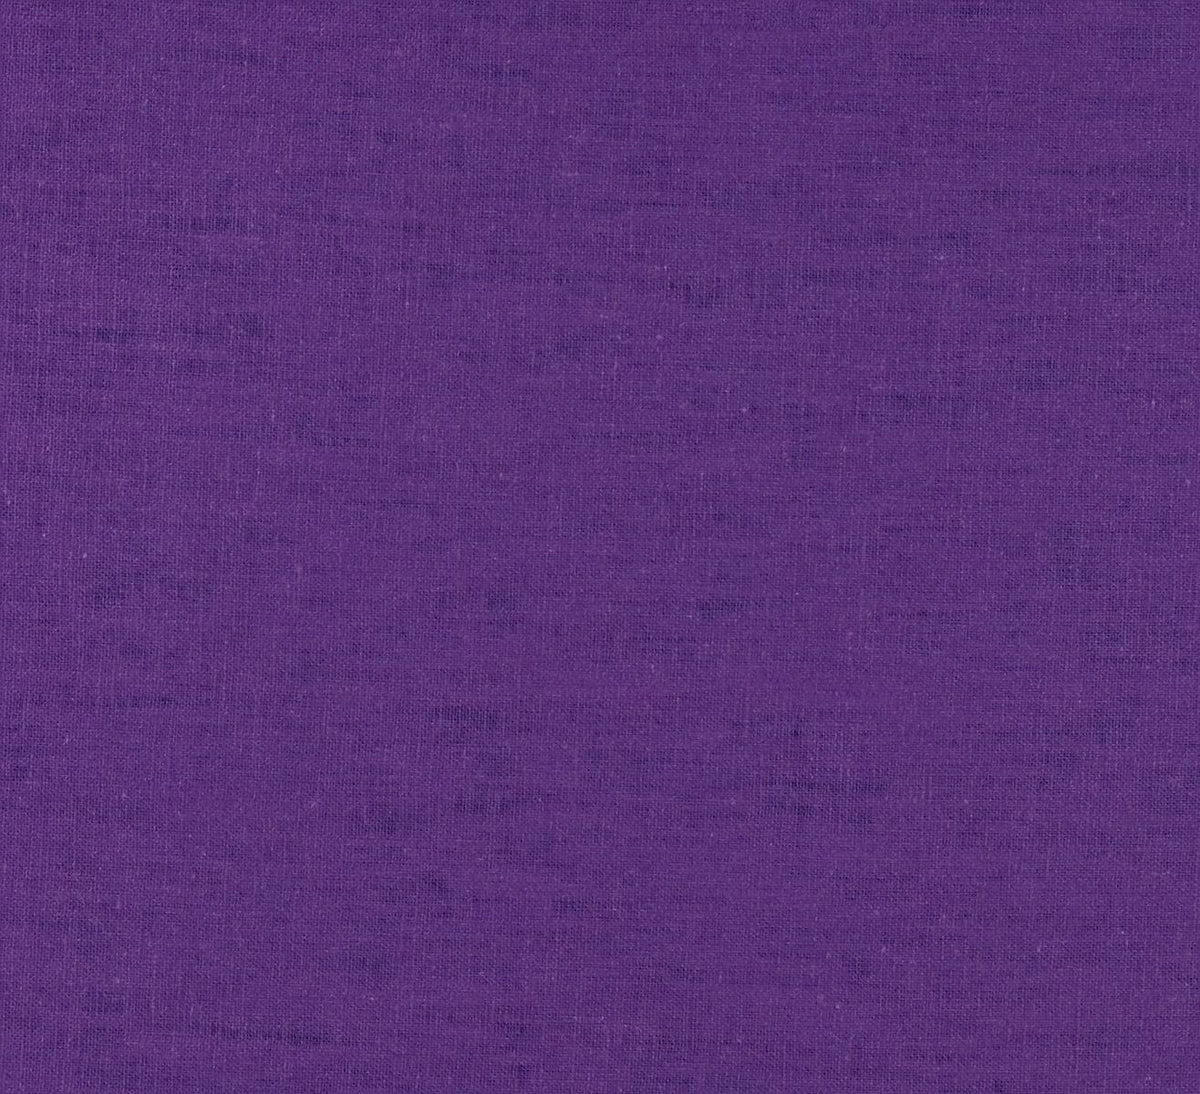 Night curtain violet Edda